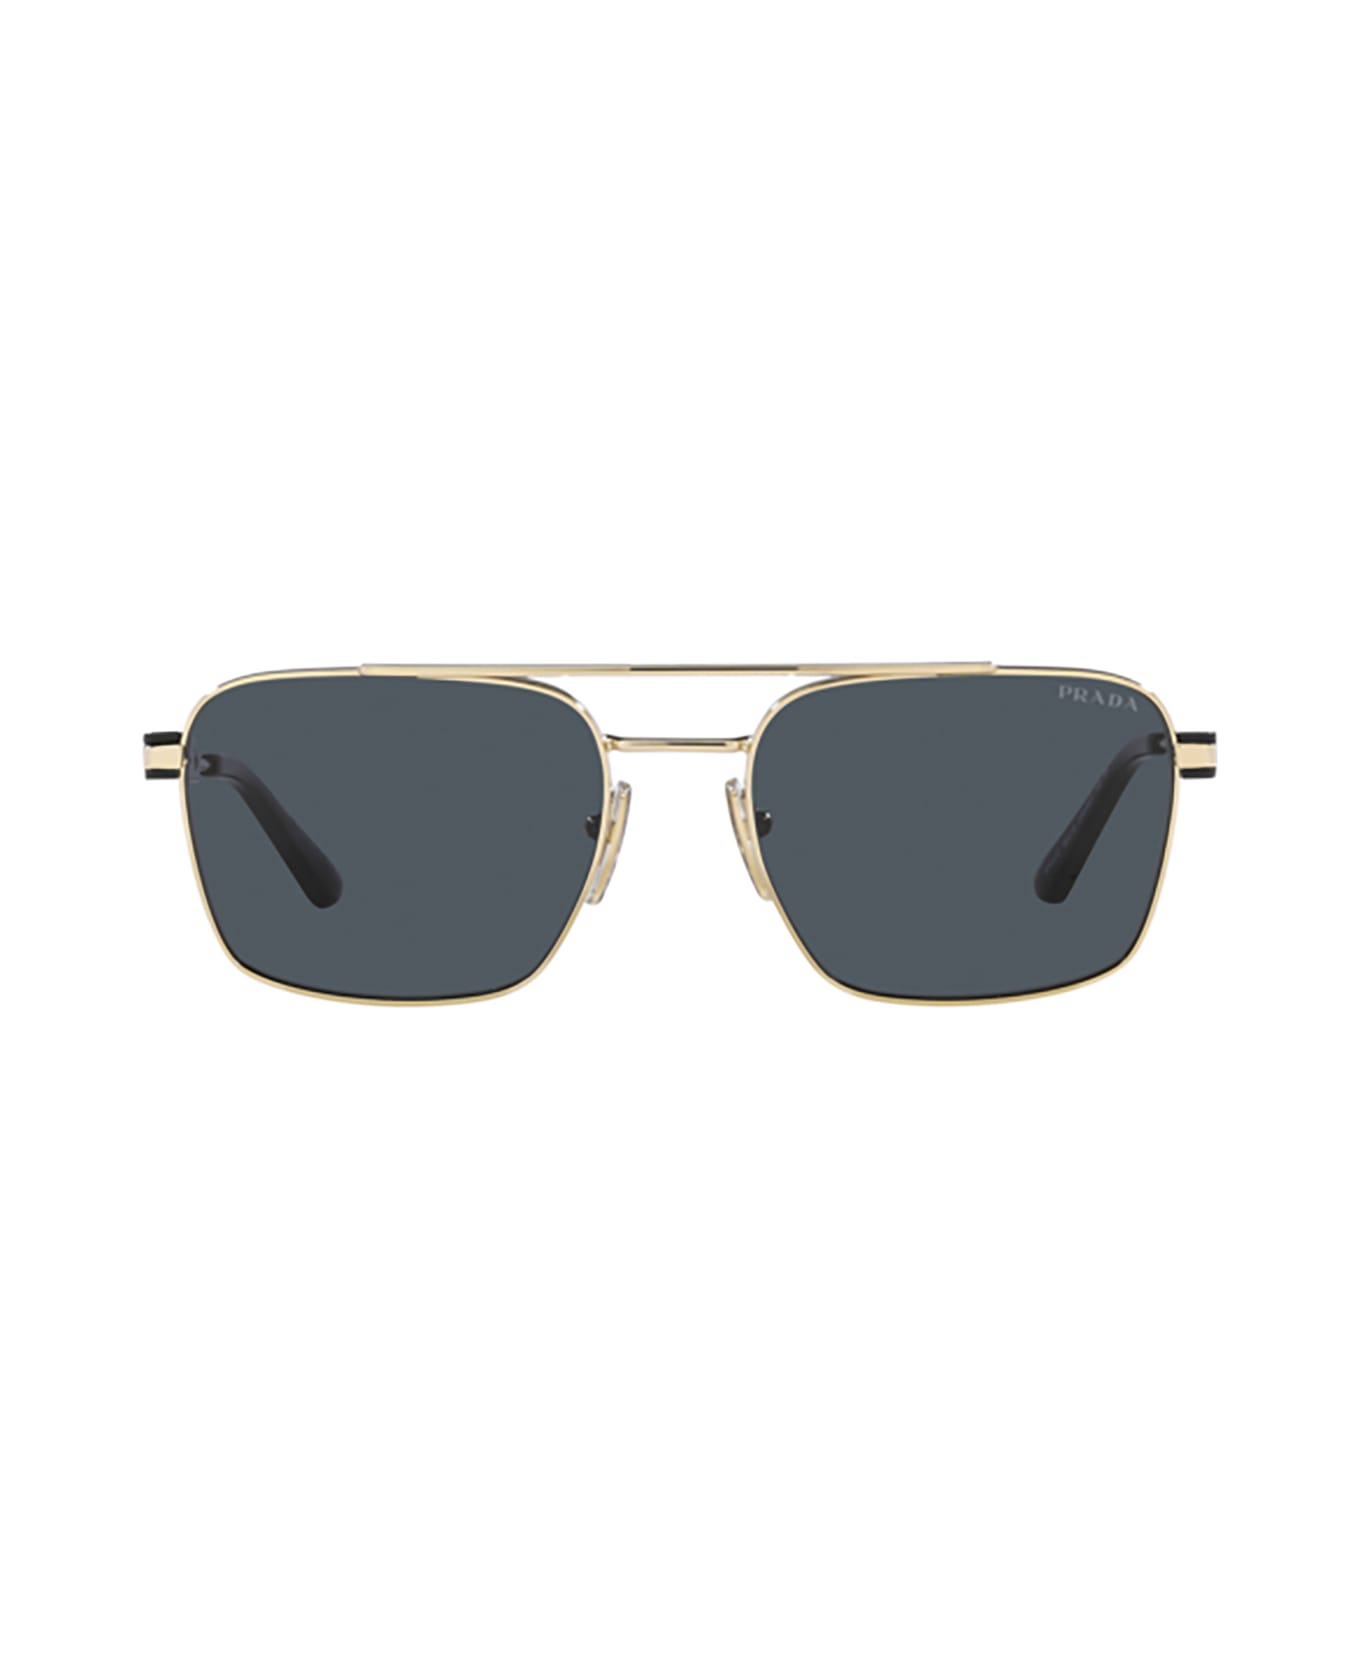 Prada Eyewear Pr 67zs Pale Gold Sunglasses - Pale Gold